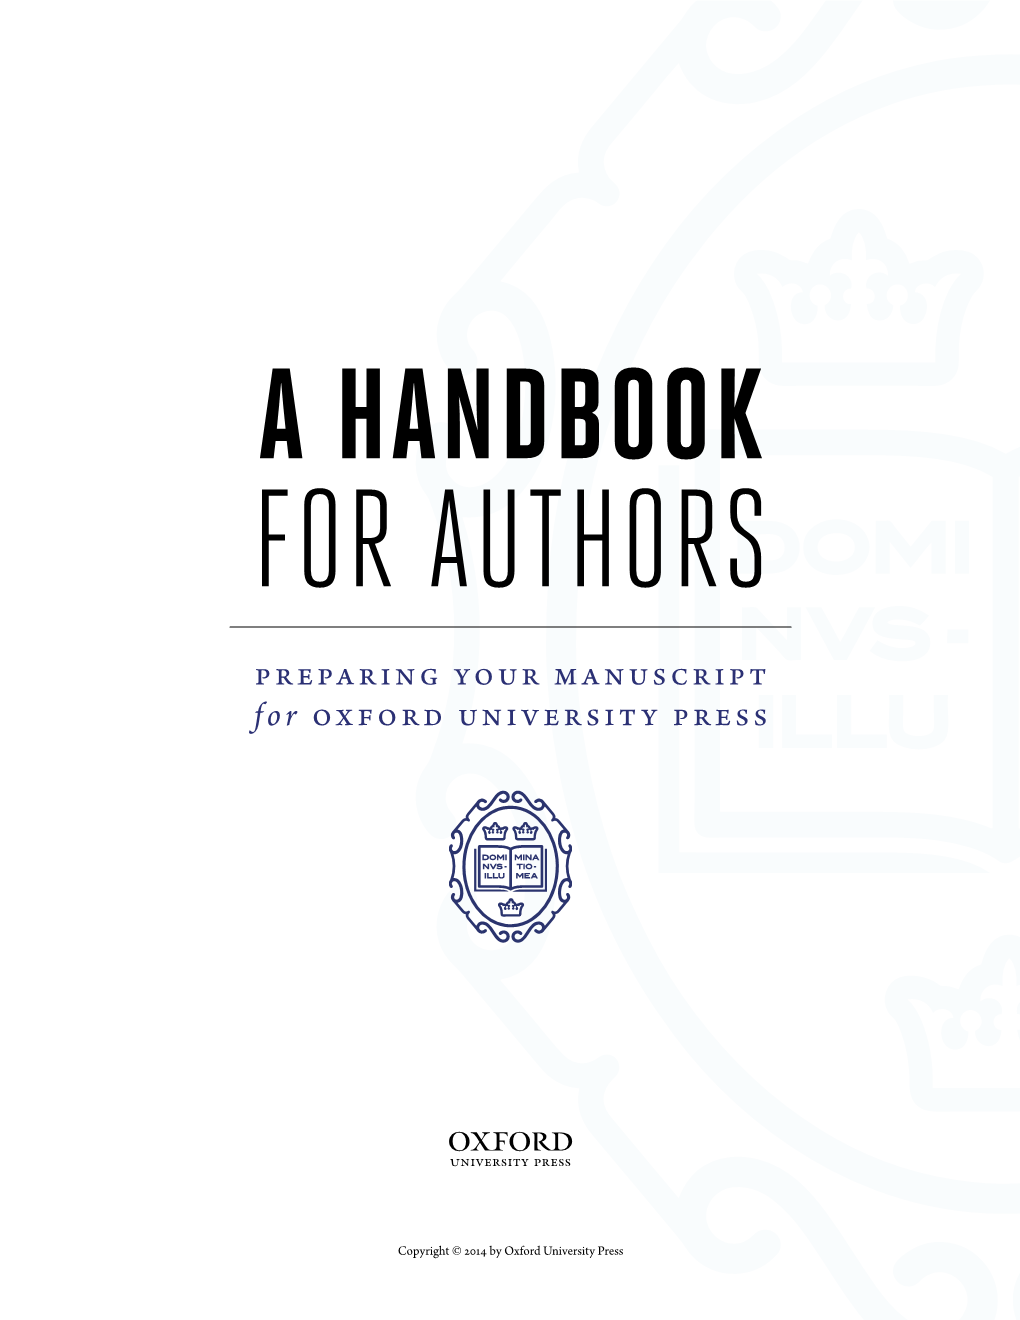 Preparing Your Manuscript for Oxford University Press